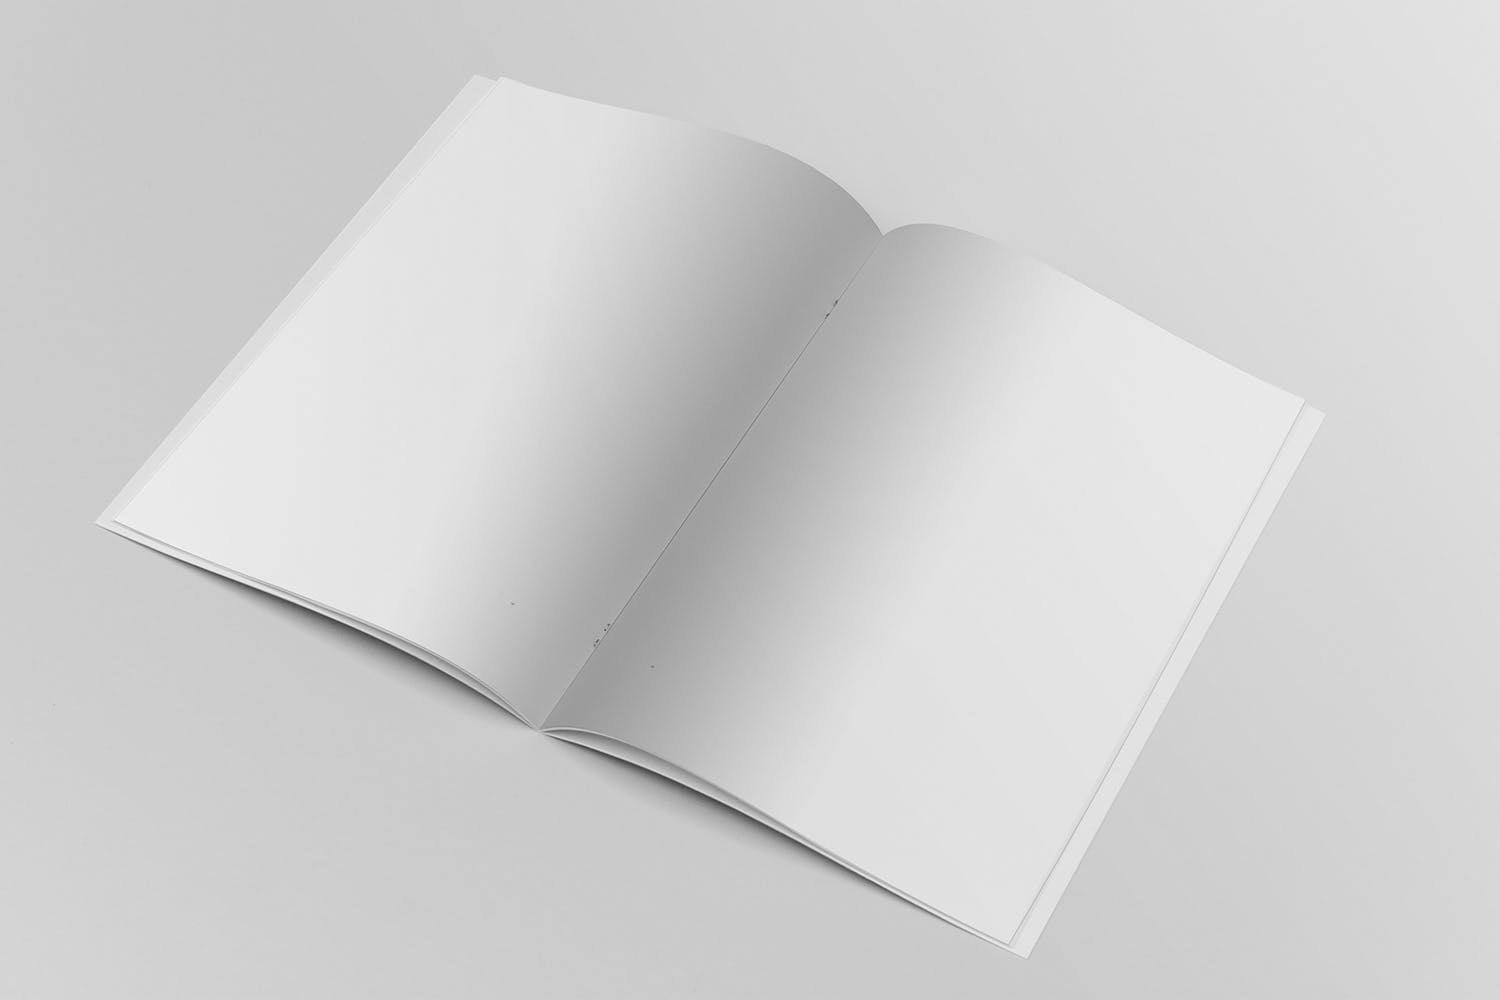 A4宣传小册子/企业画册内页排版设计效果图样机非凡图库精选 A4 Brochure Mockup Open Pages插图(1)